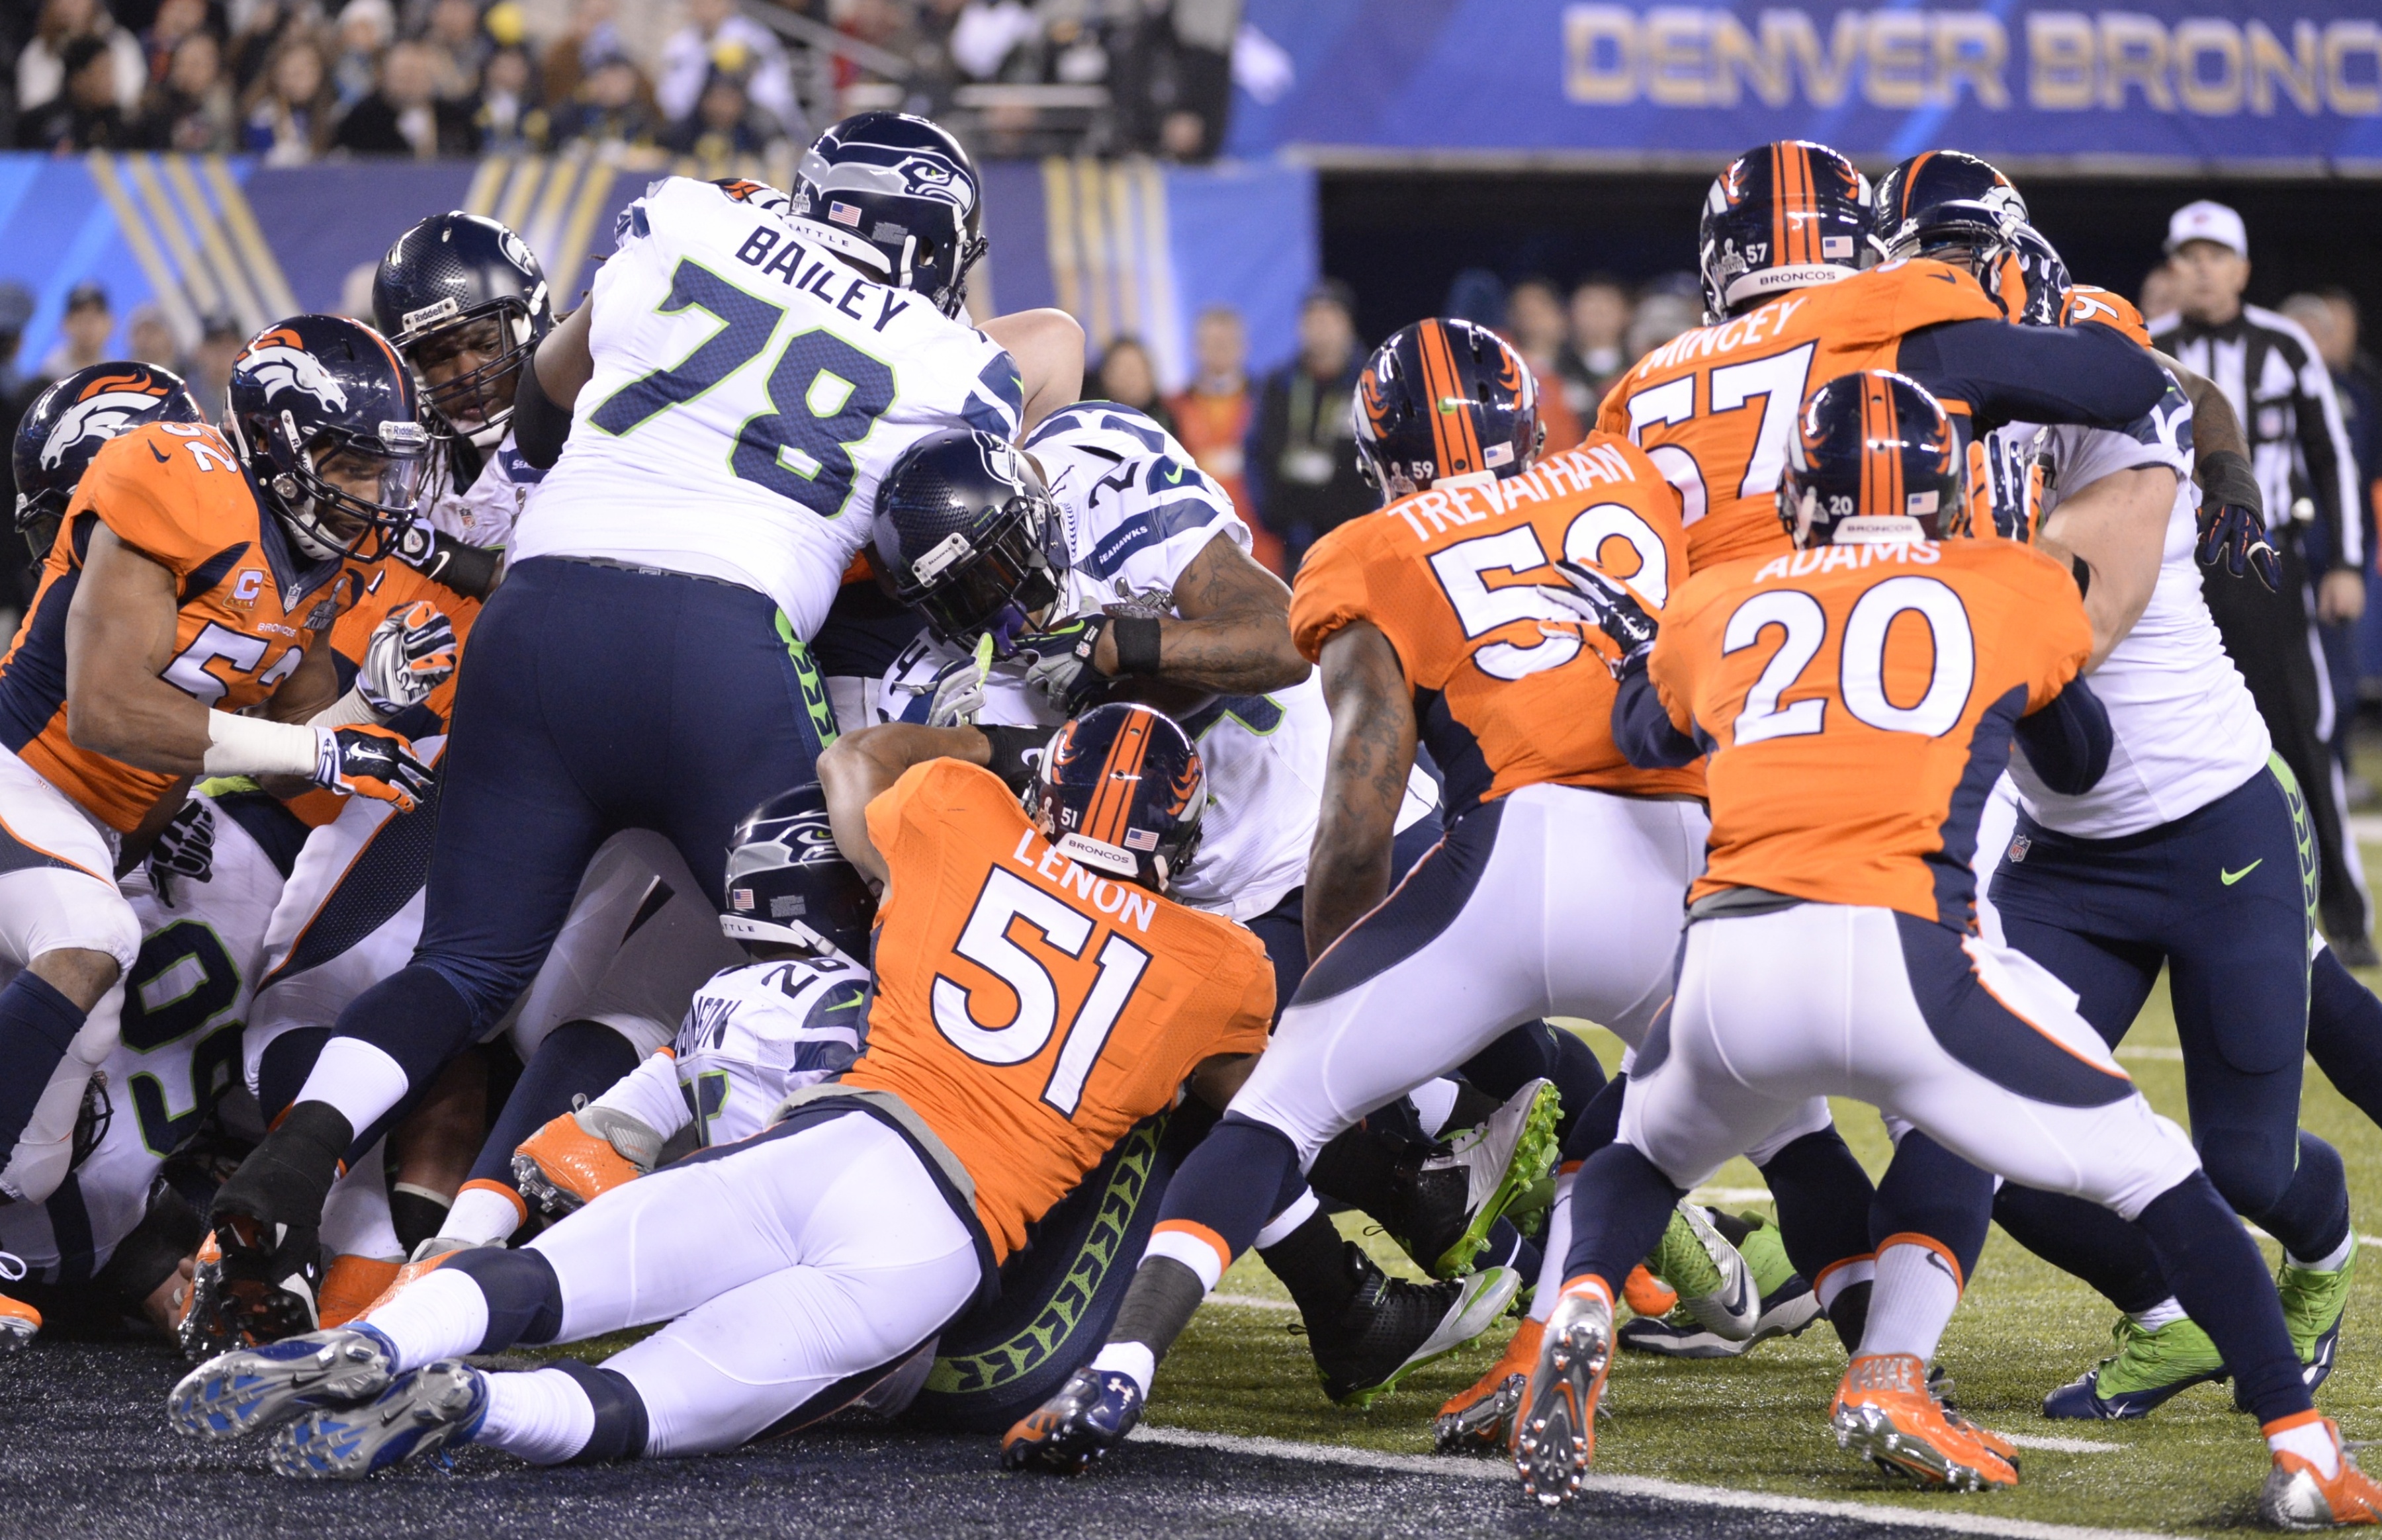 scores a yard touchdown against the Denver Broncos during Super Bowl